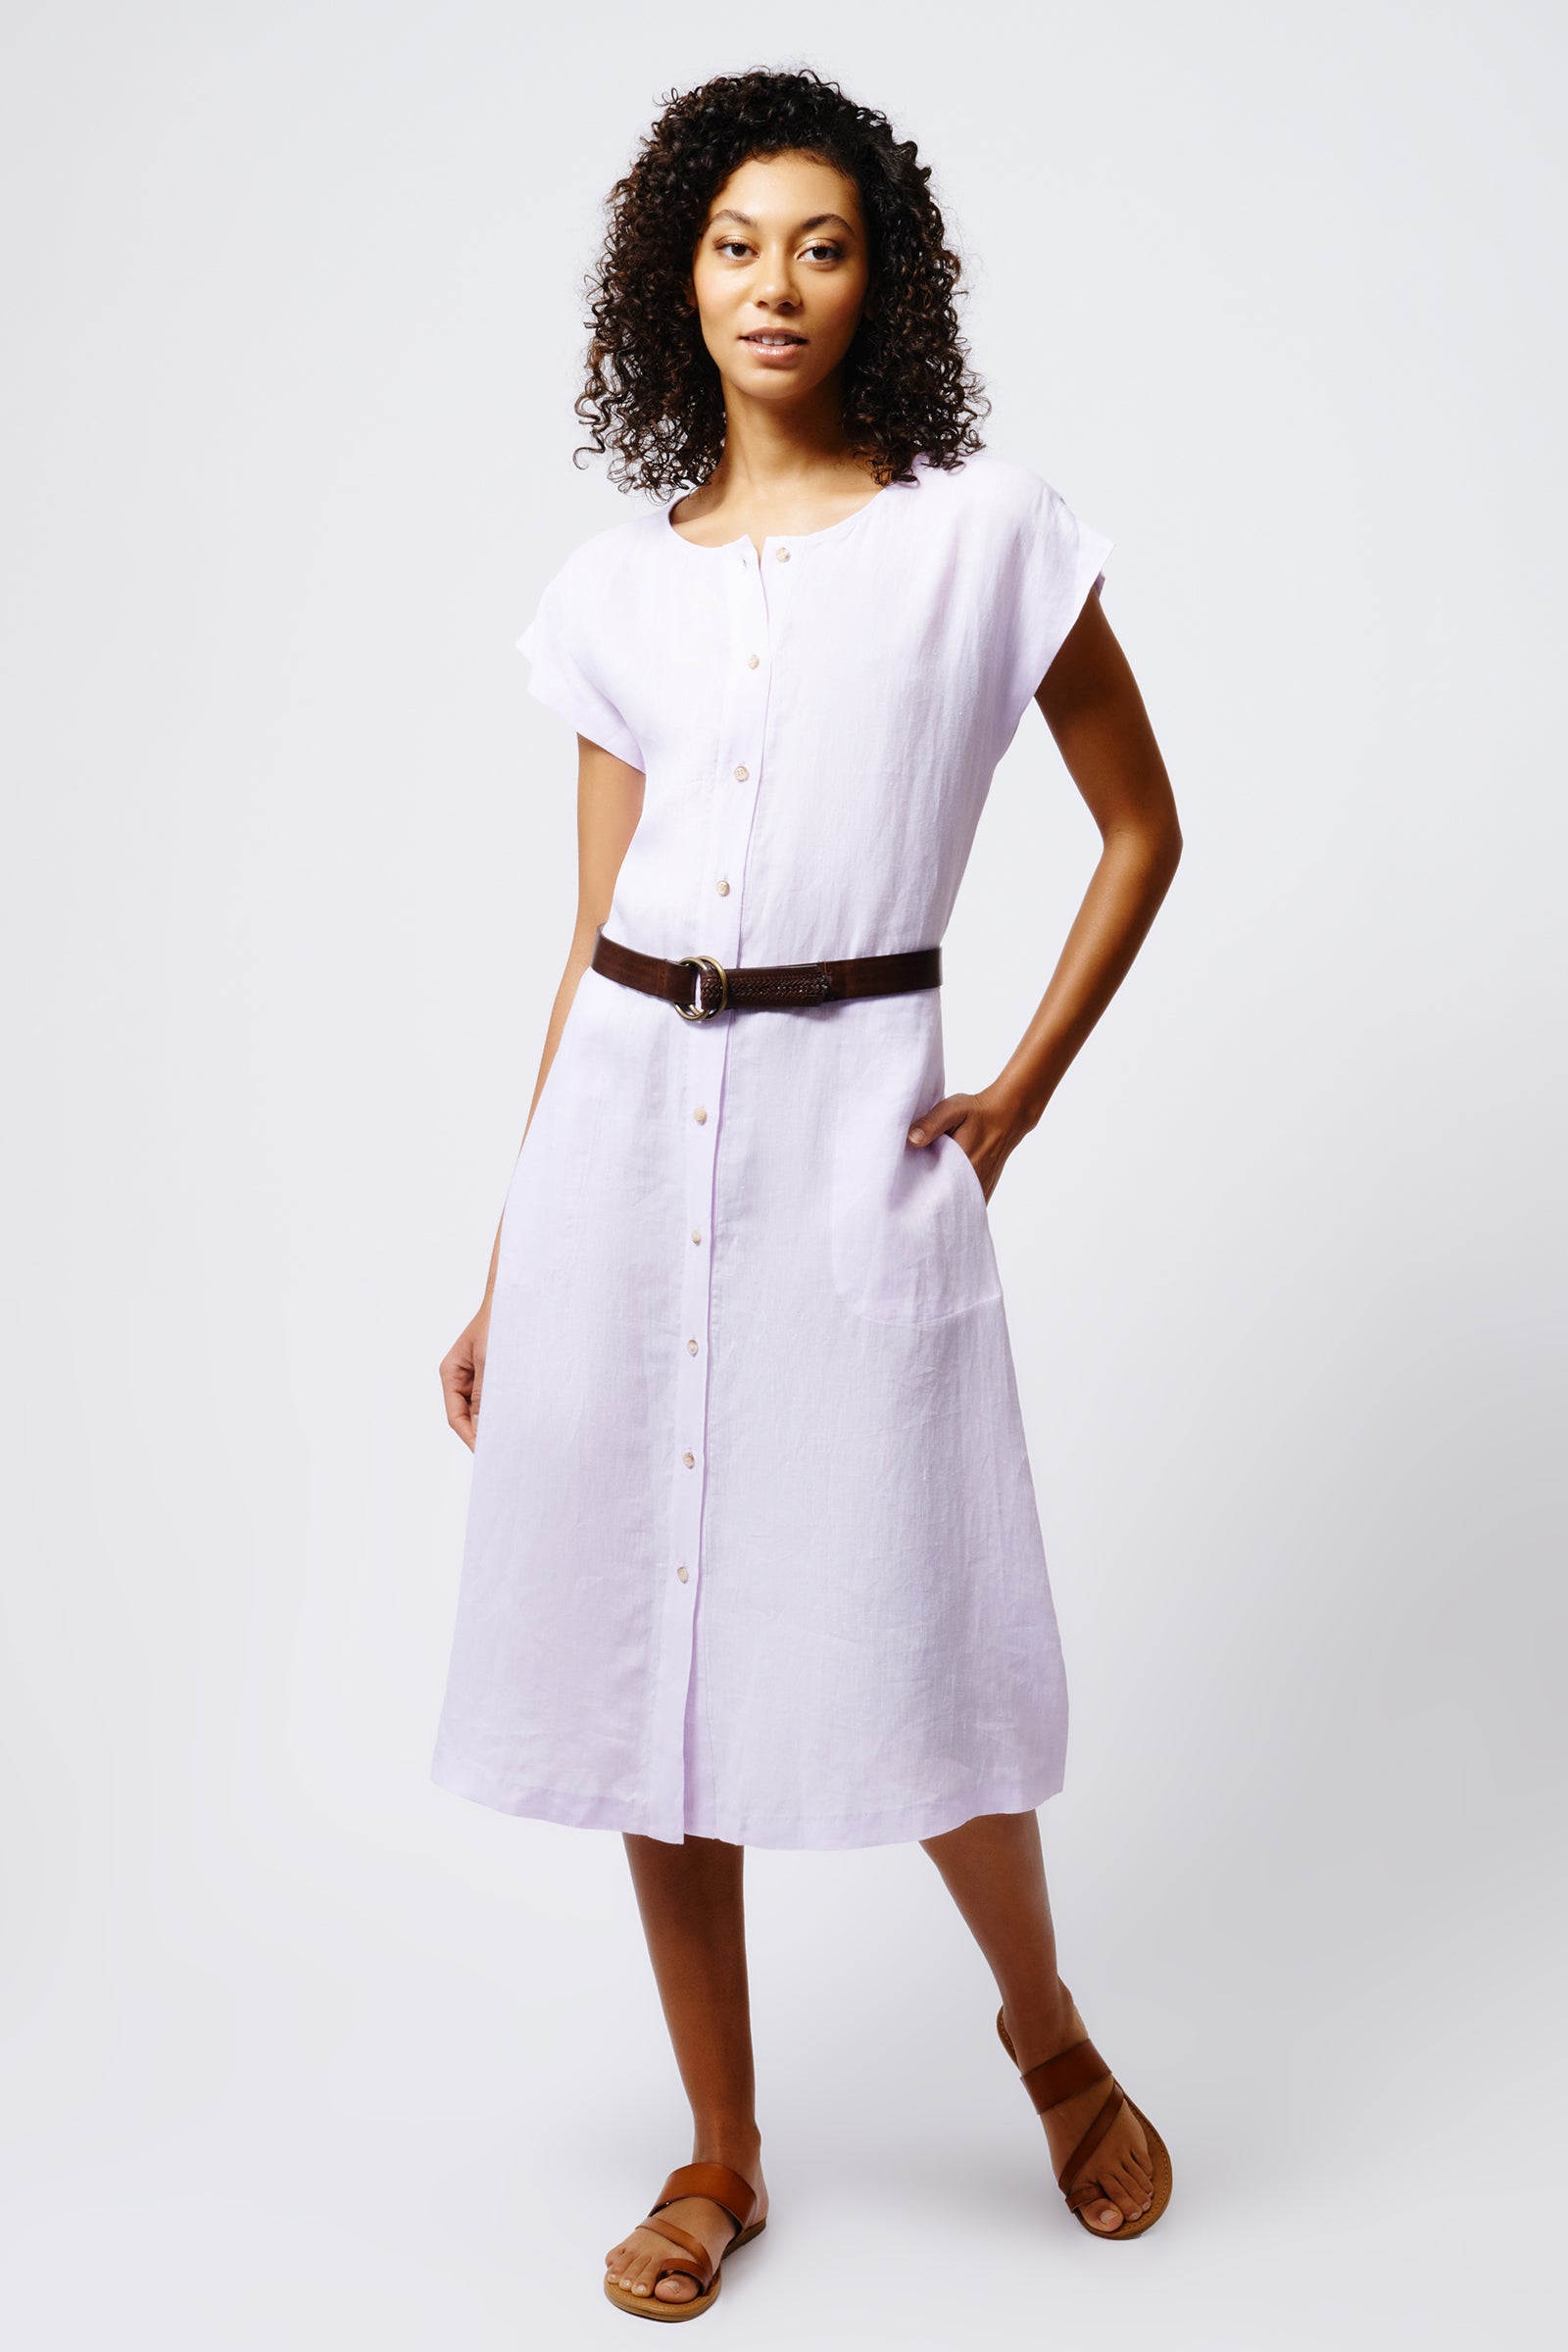 Kal Rieman Harlow Cap Sleeve Dress in Lavender Linen on Model Front View Full